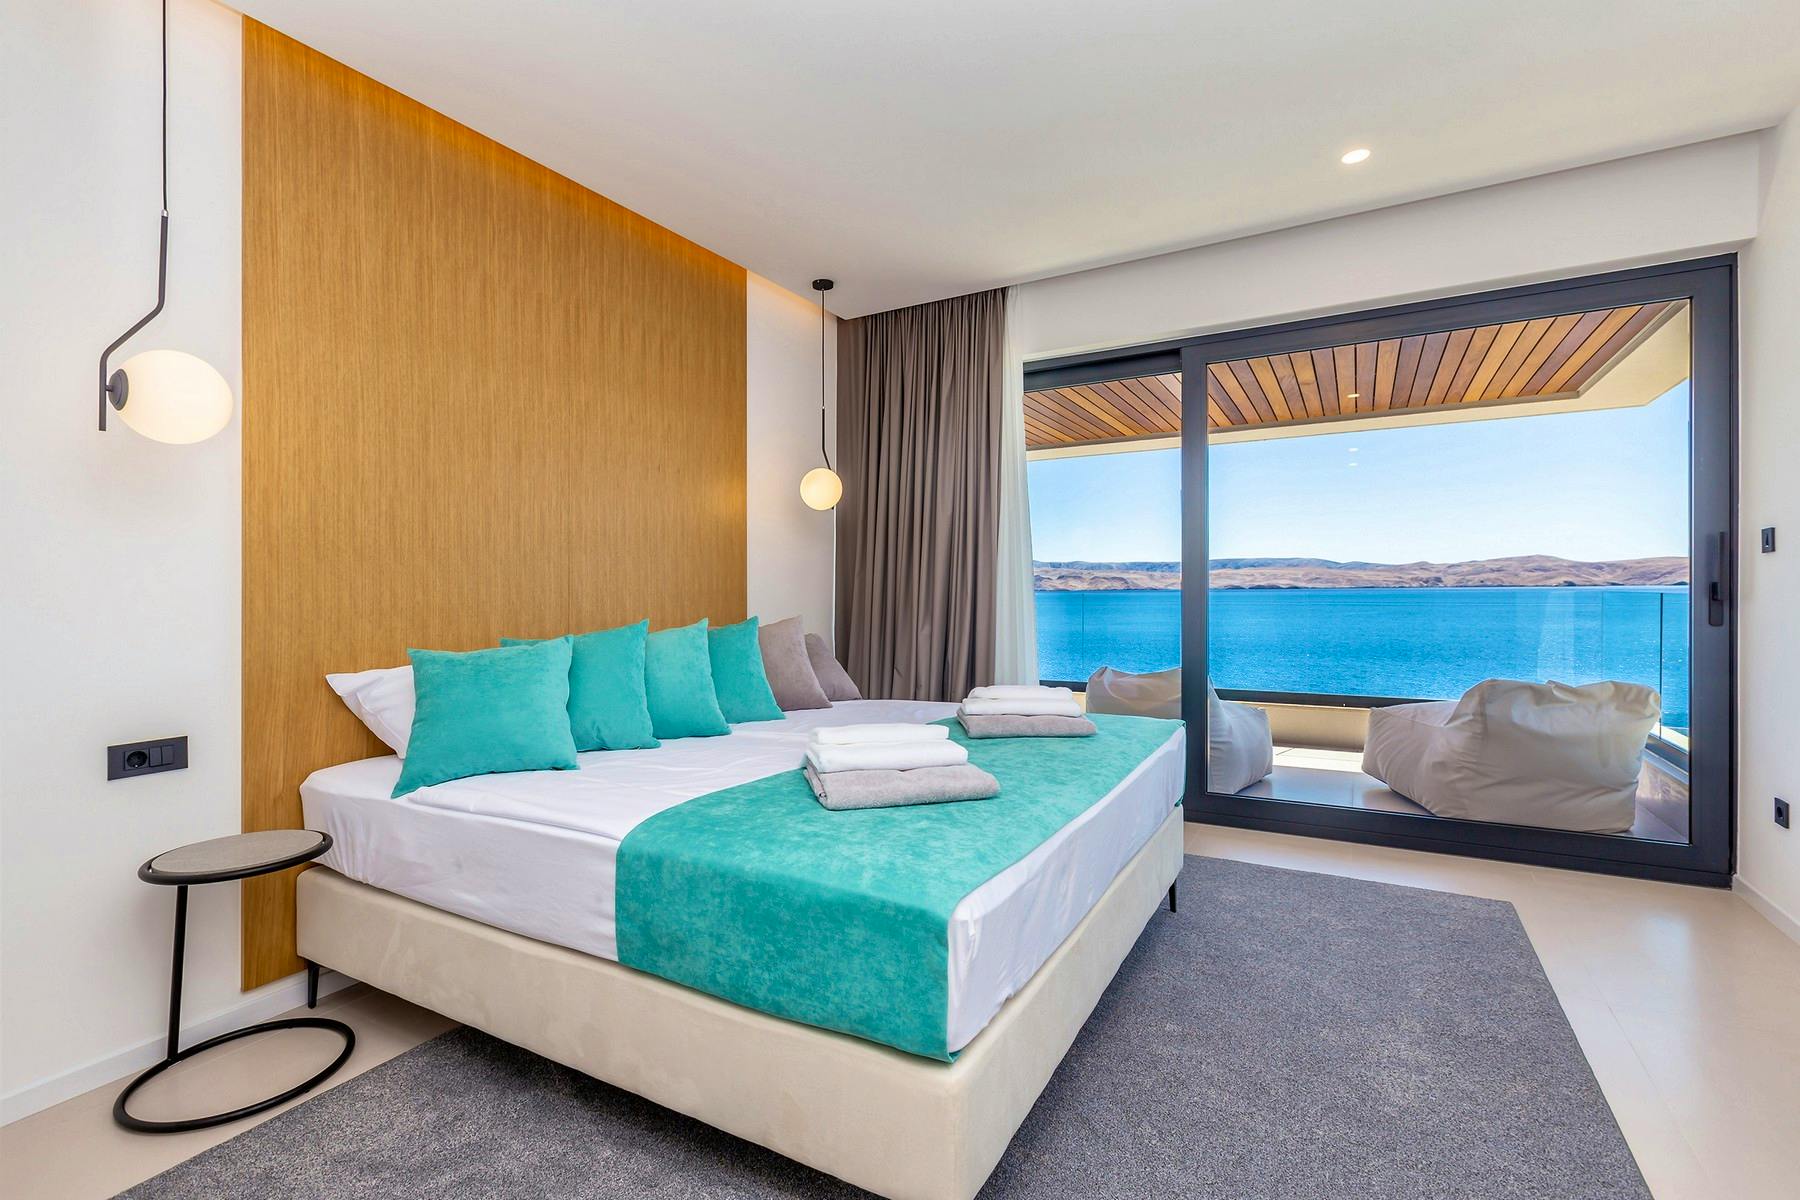 Elegant bedroom with sea view